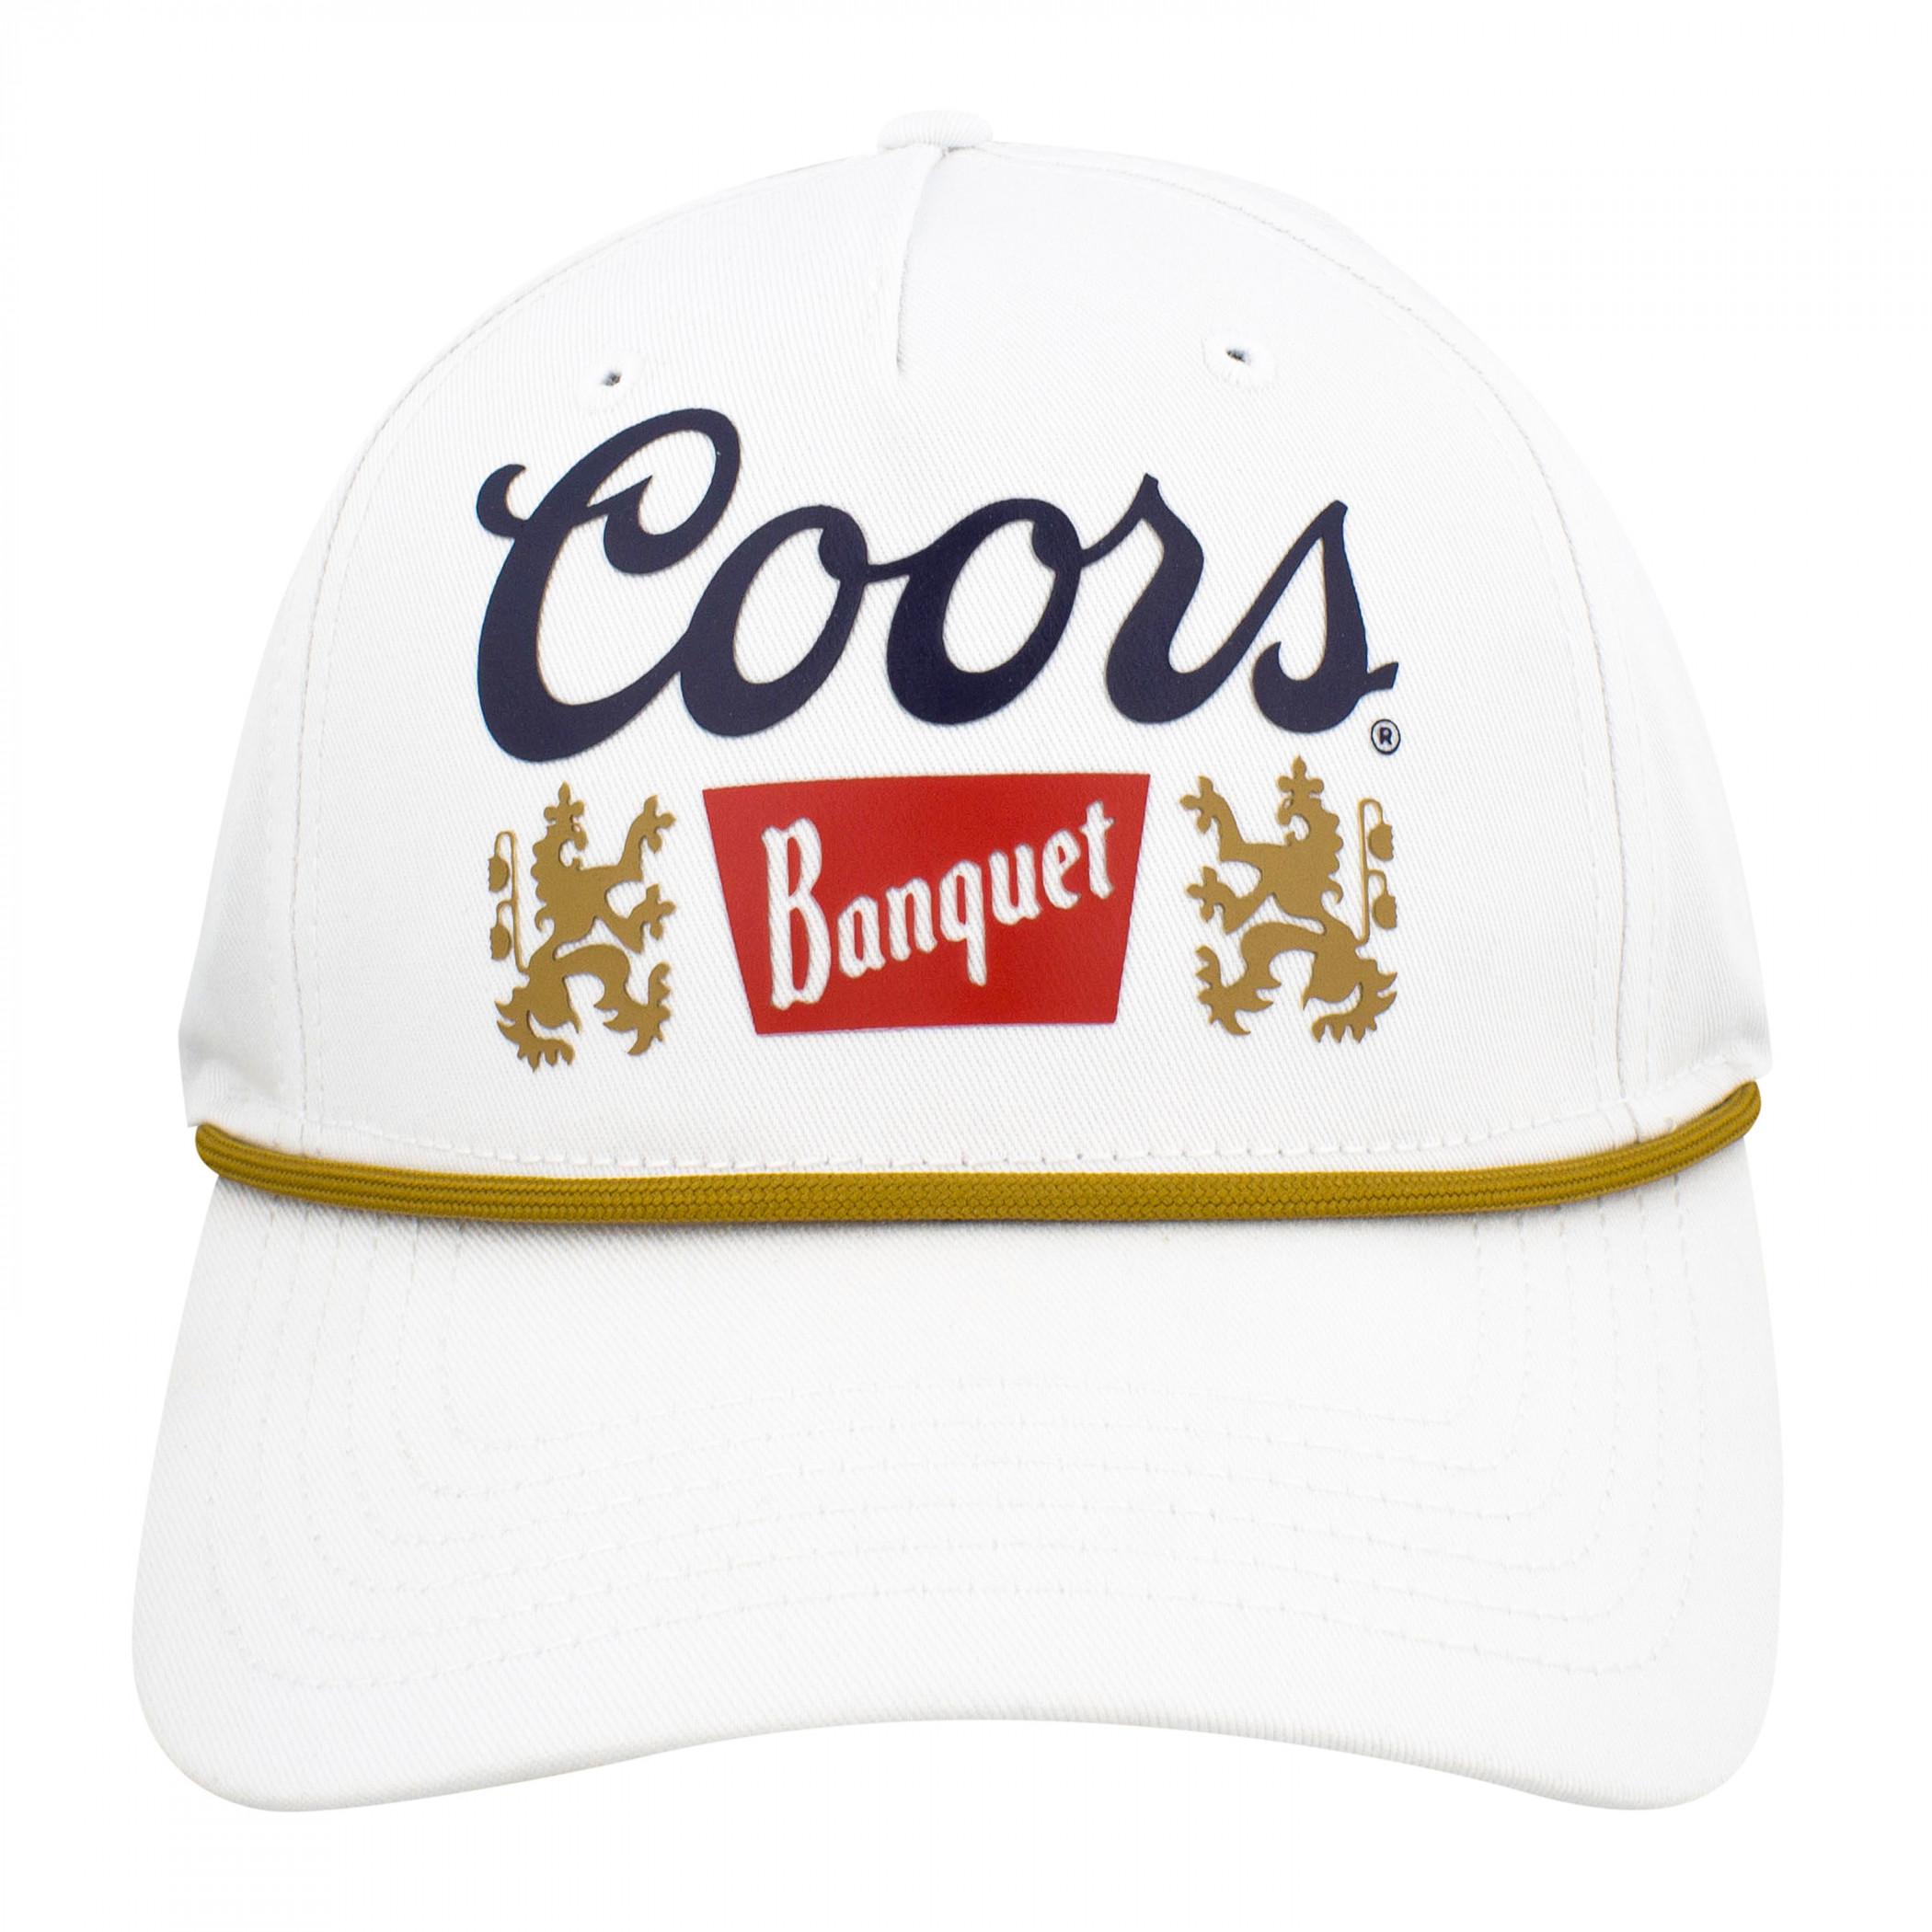 Coors Banquet Gold Rope Adjustable Golfer Hat